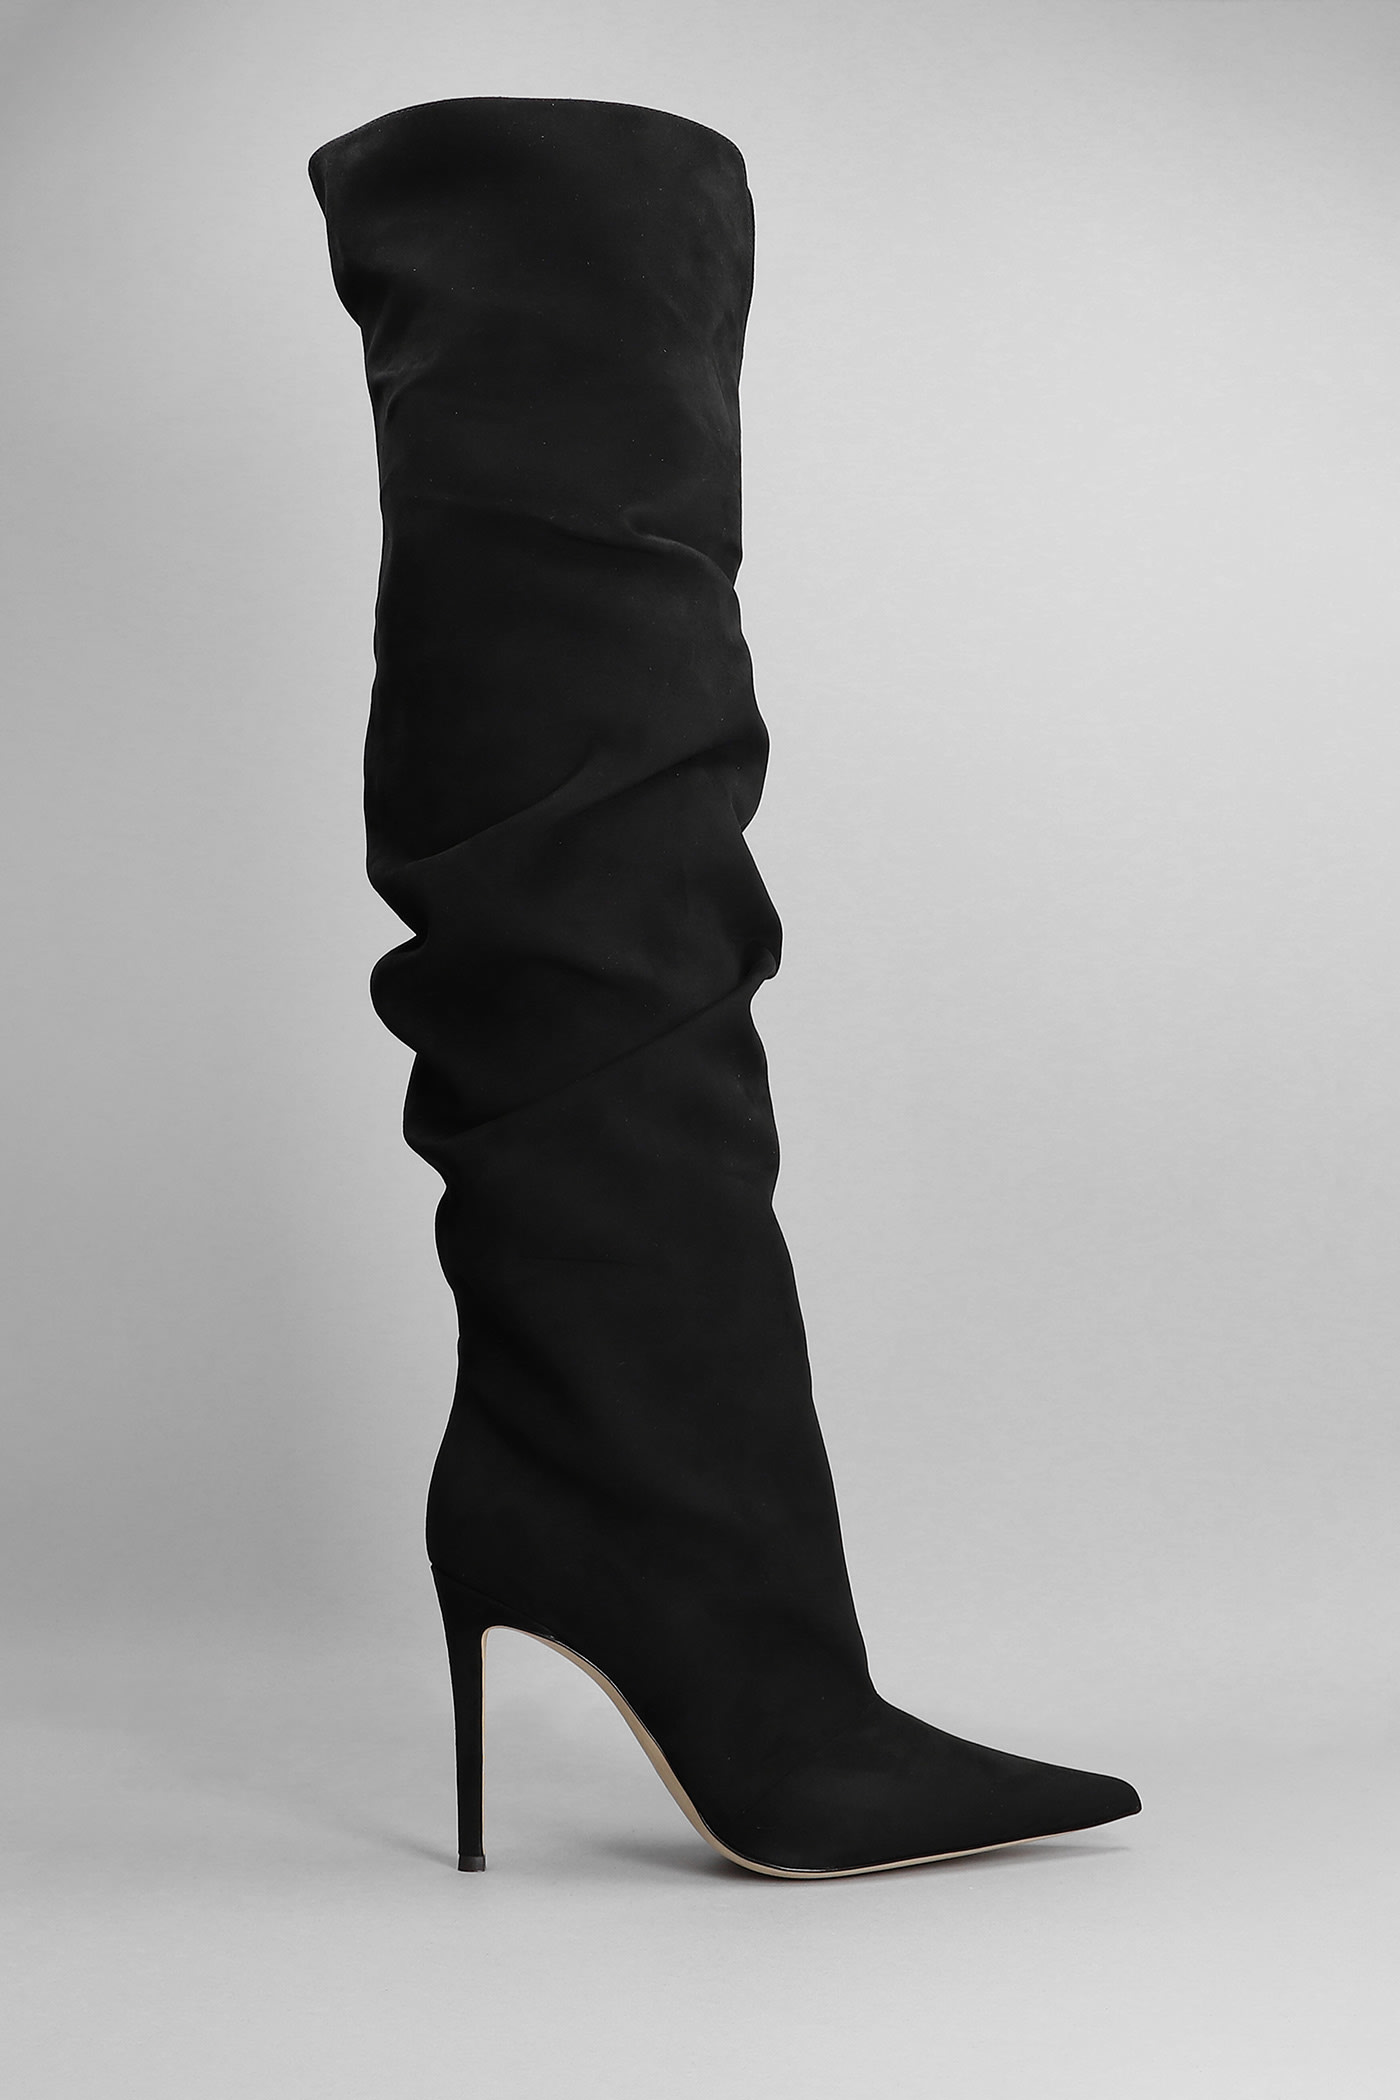 Giuseppe Zanotti Bonny High Heels Boots In Black Suede